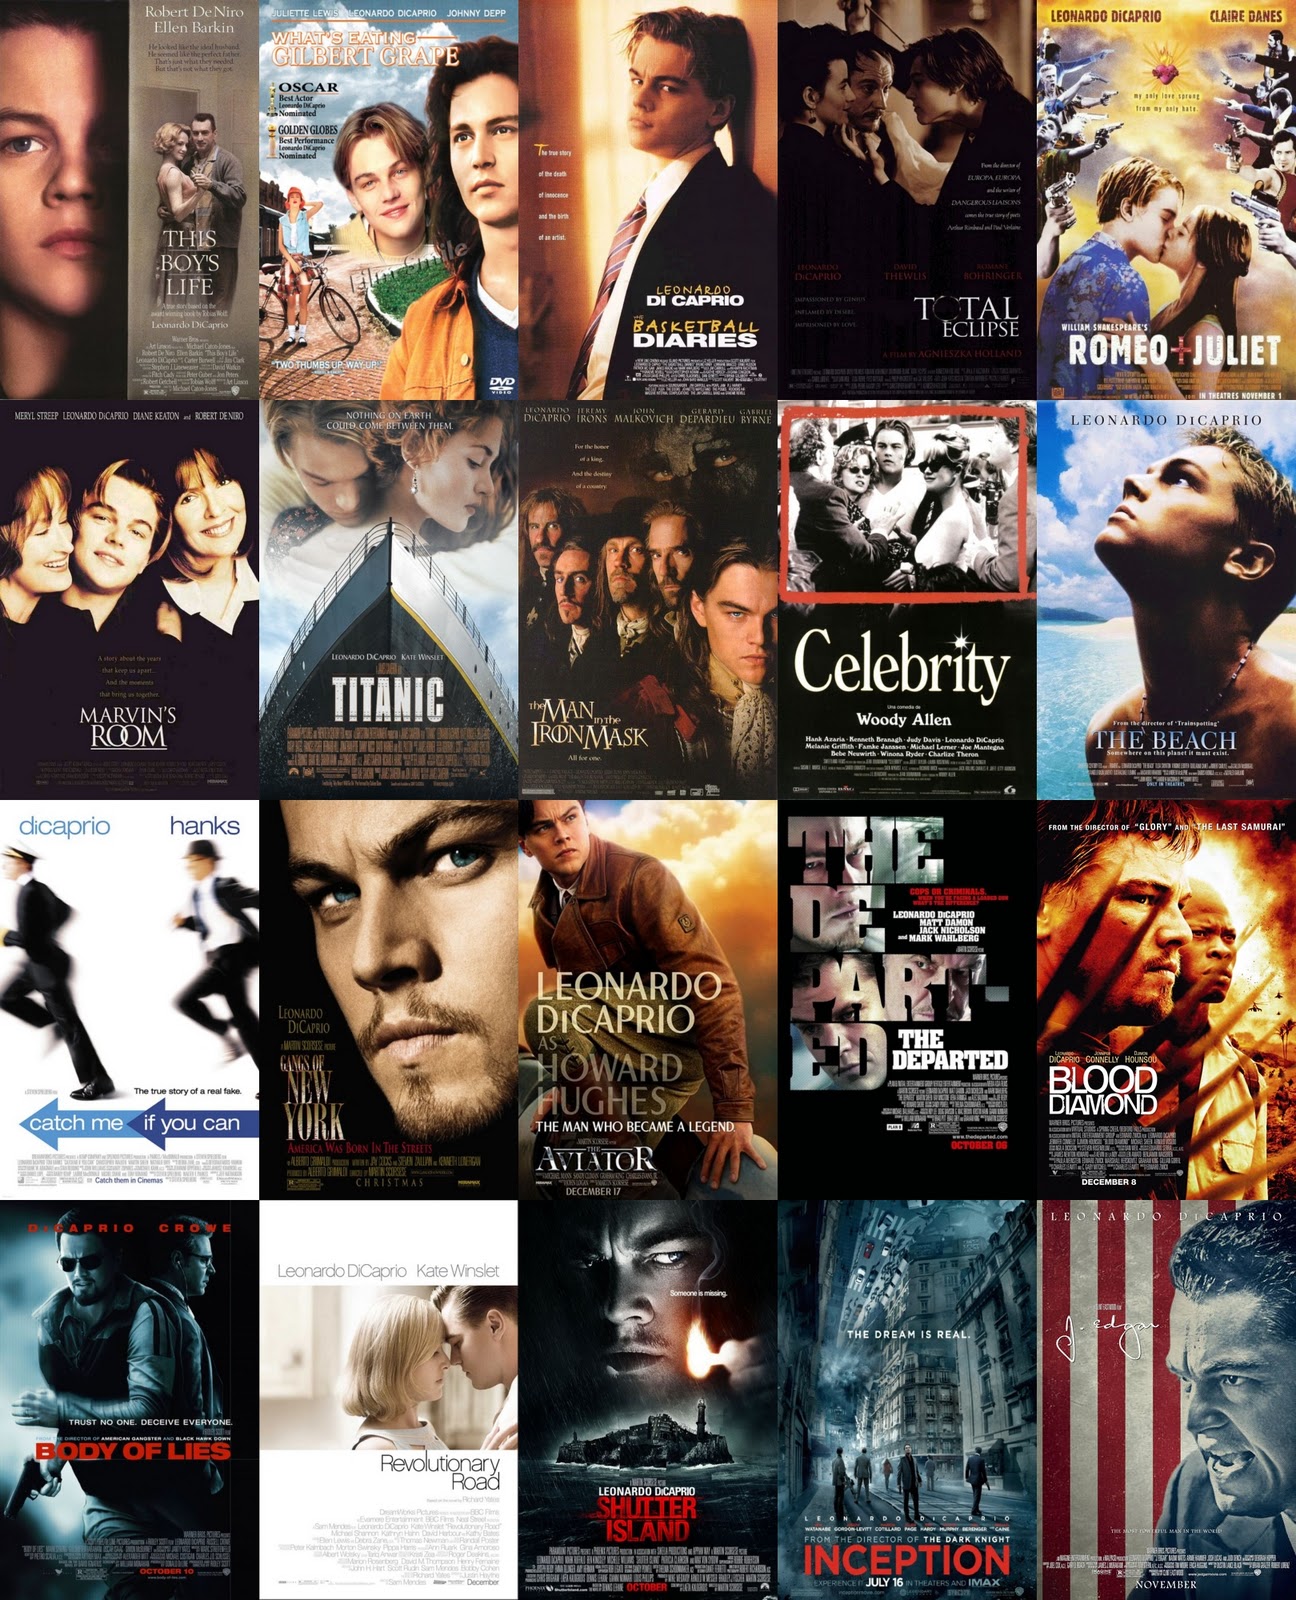 http://2.bp.blogspot.com/-8esEaC4gBBw/Tu-K5bTgoYI/AAAAAAAAHOQ/Lv02vEXnYtQ/s1600/Leonardo+DiCaprio+Movies+Collection.jpg